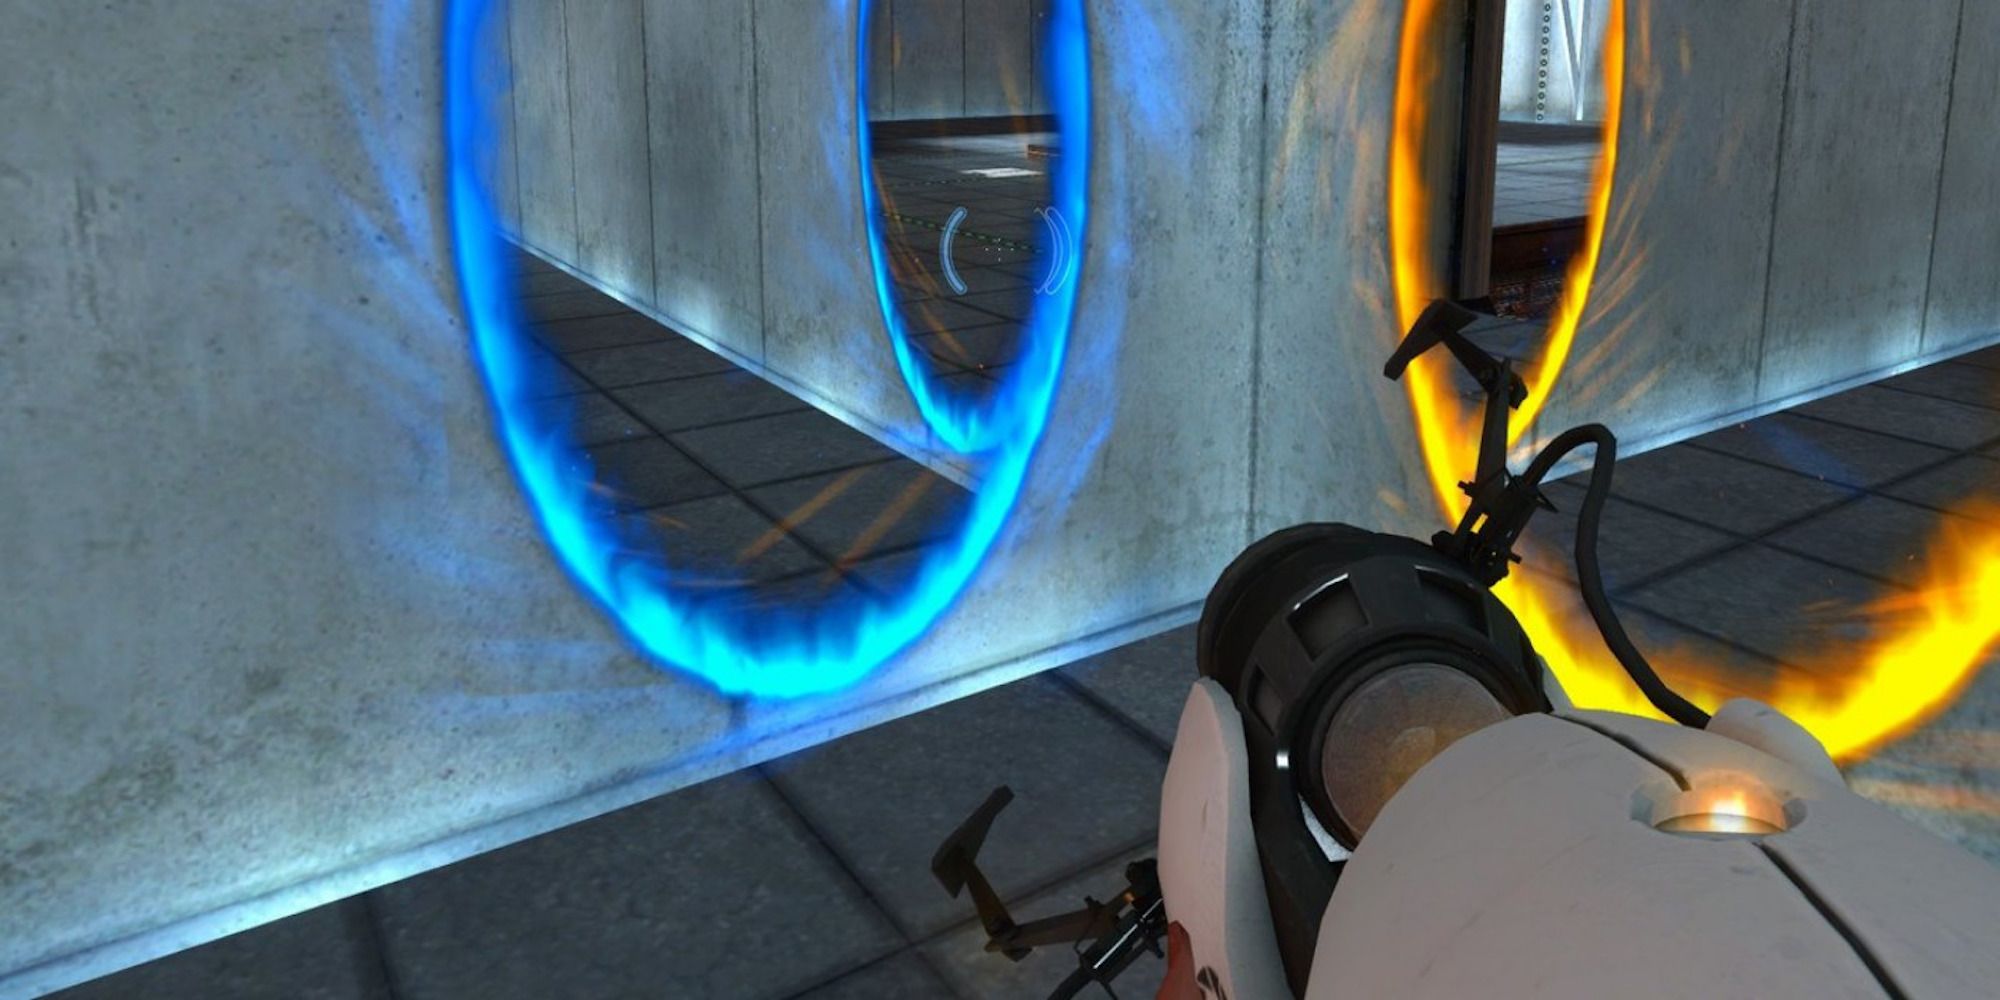 The portal gun from Portal